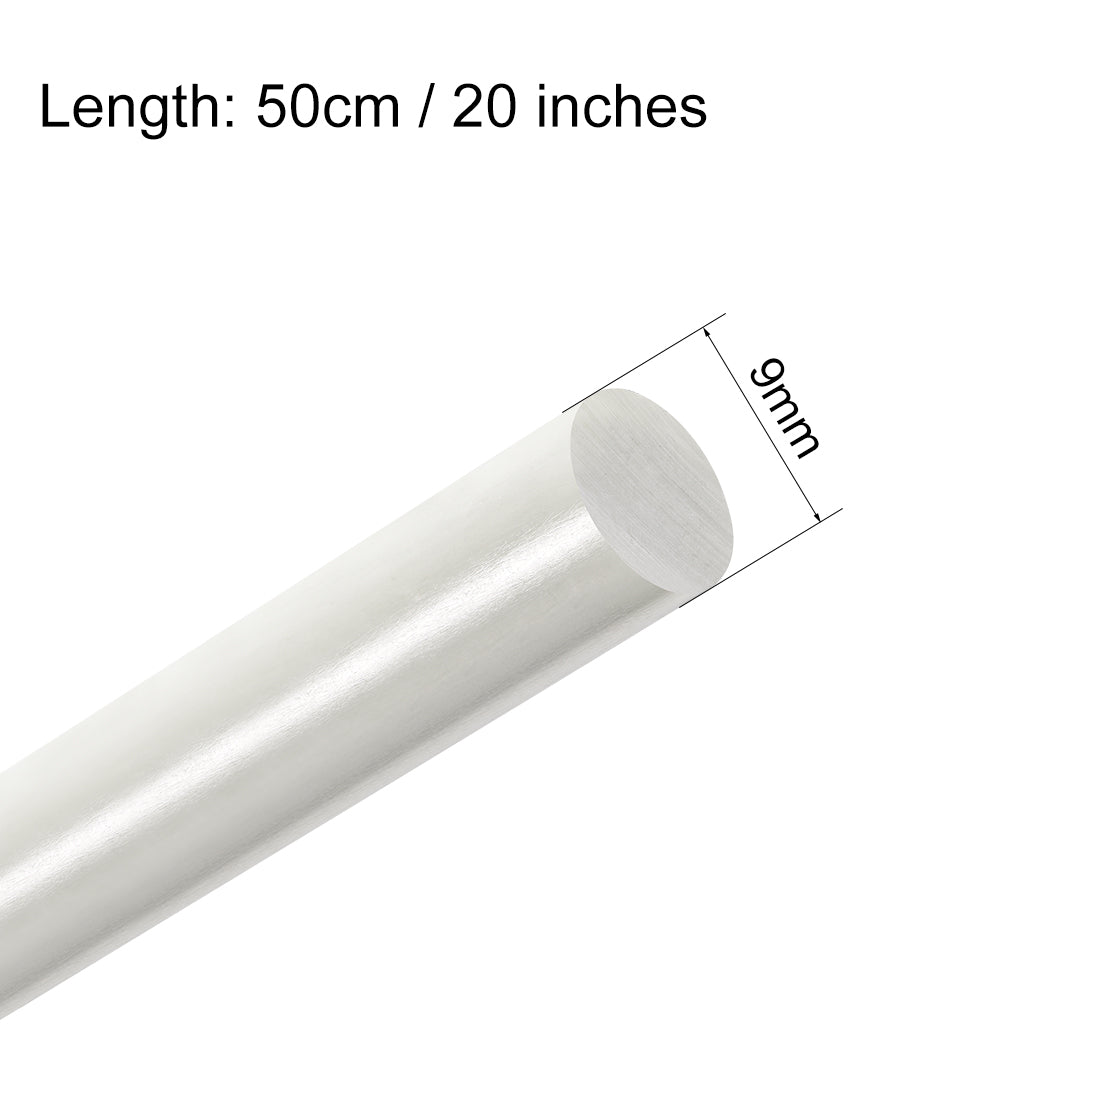 uxcell Uxcell FRP Fiberglass Round Rod,9mm Dia 50cm Long,White Engineering Round Bar 2pcs